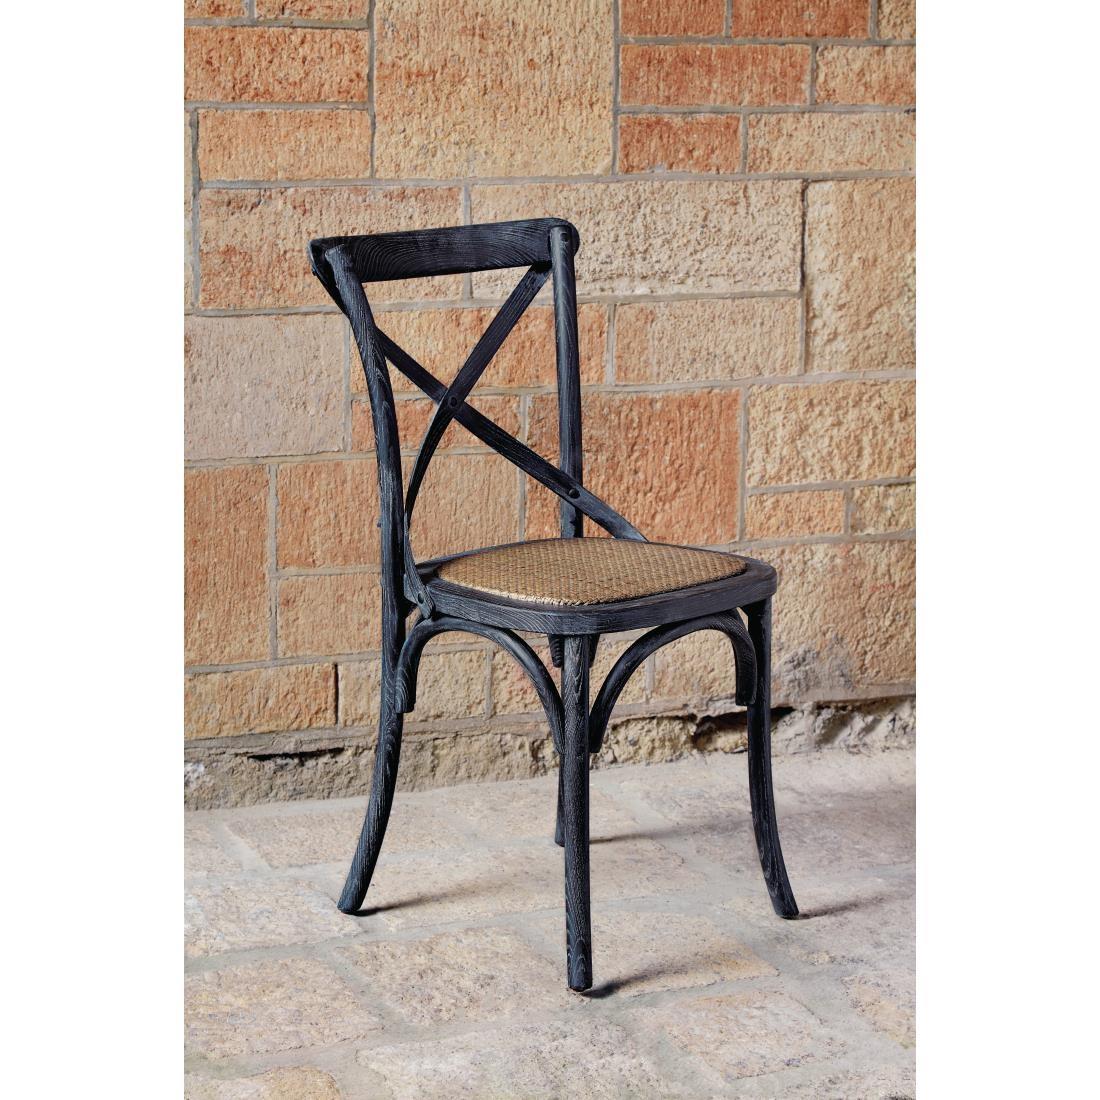 GG654 - Bolero Wooden Dining Chair with Cross Backrest Black Wash Finish (Box 2) - GG654  - 7